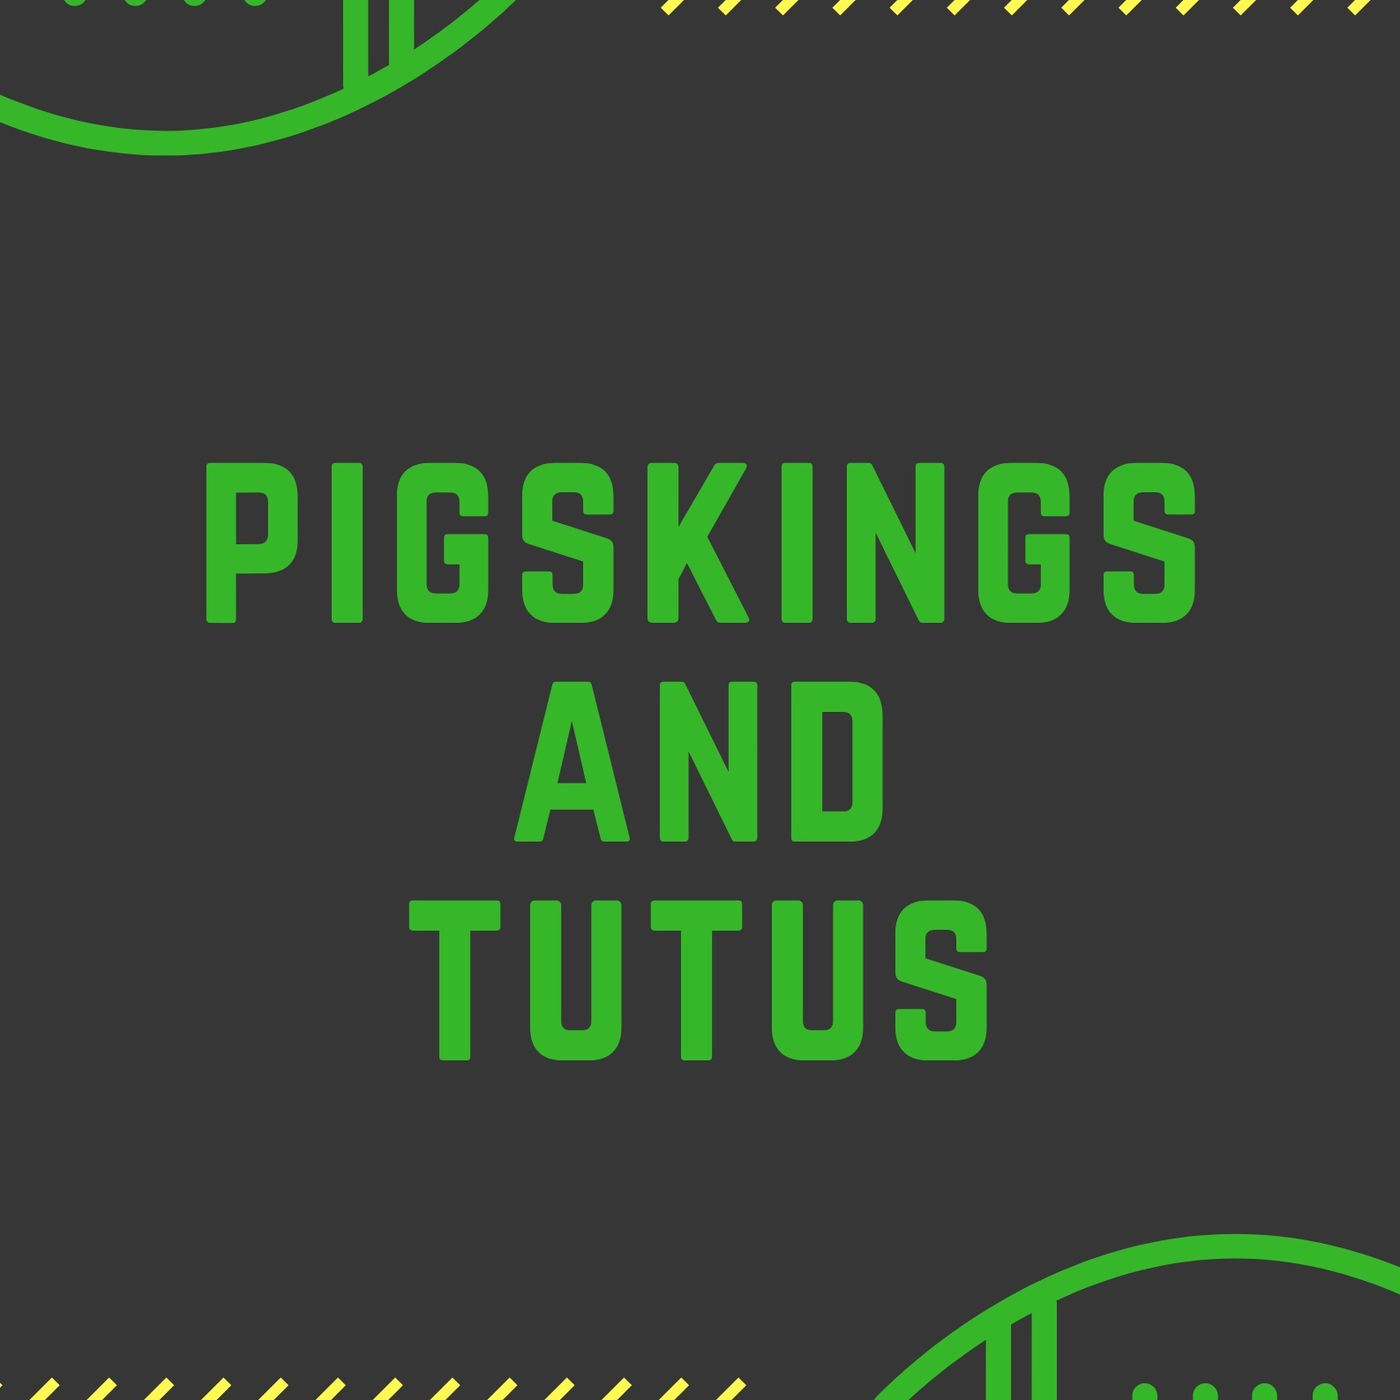 Pigskins and tutus